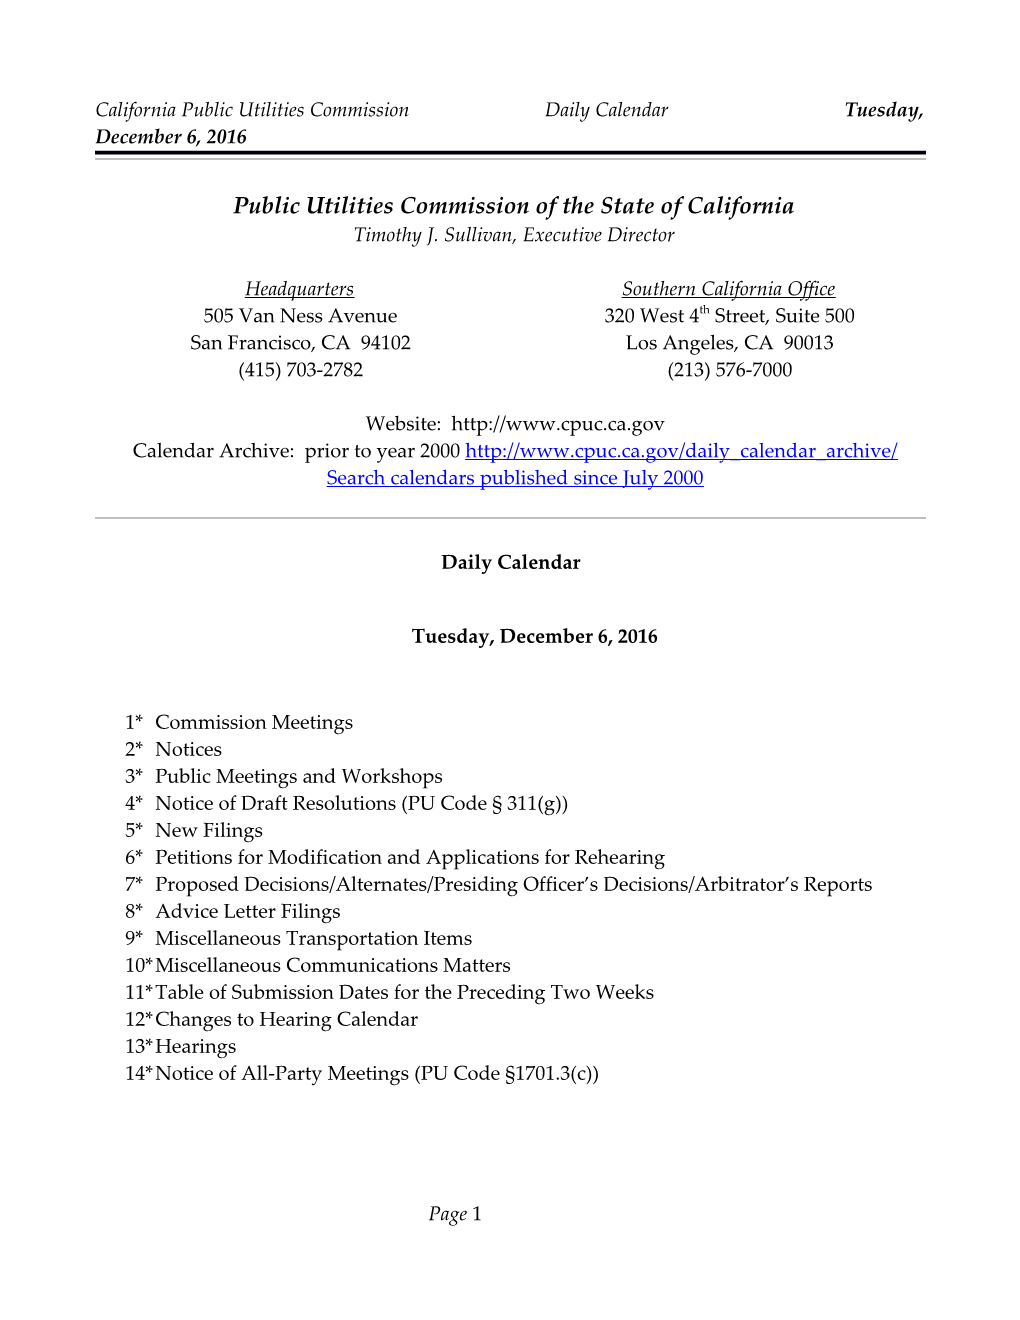 California Public Utilities Commission Daily Calendar Tuesday, December 6, 2016